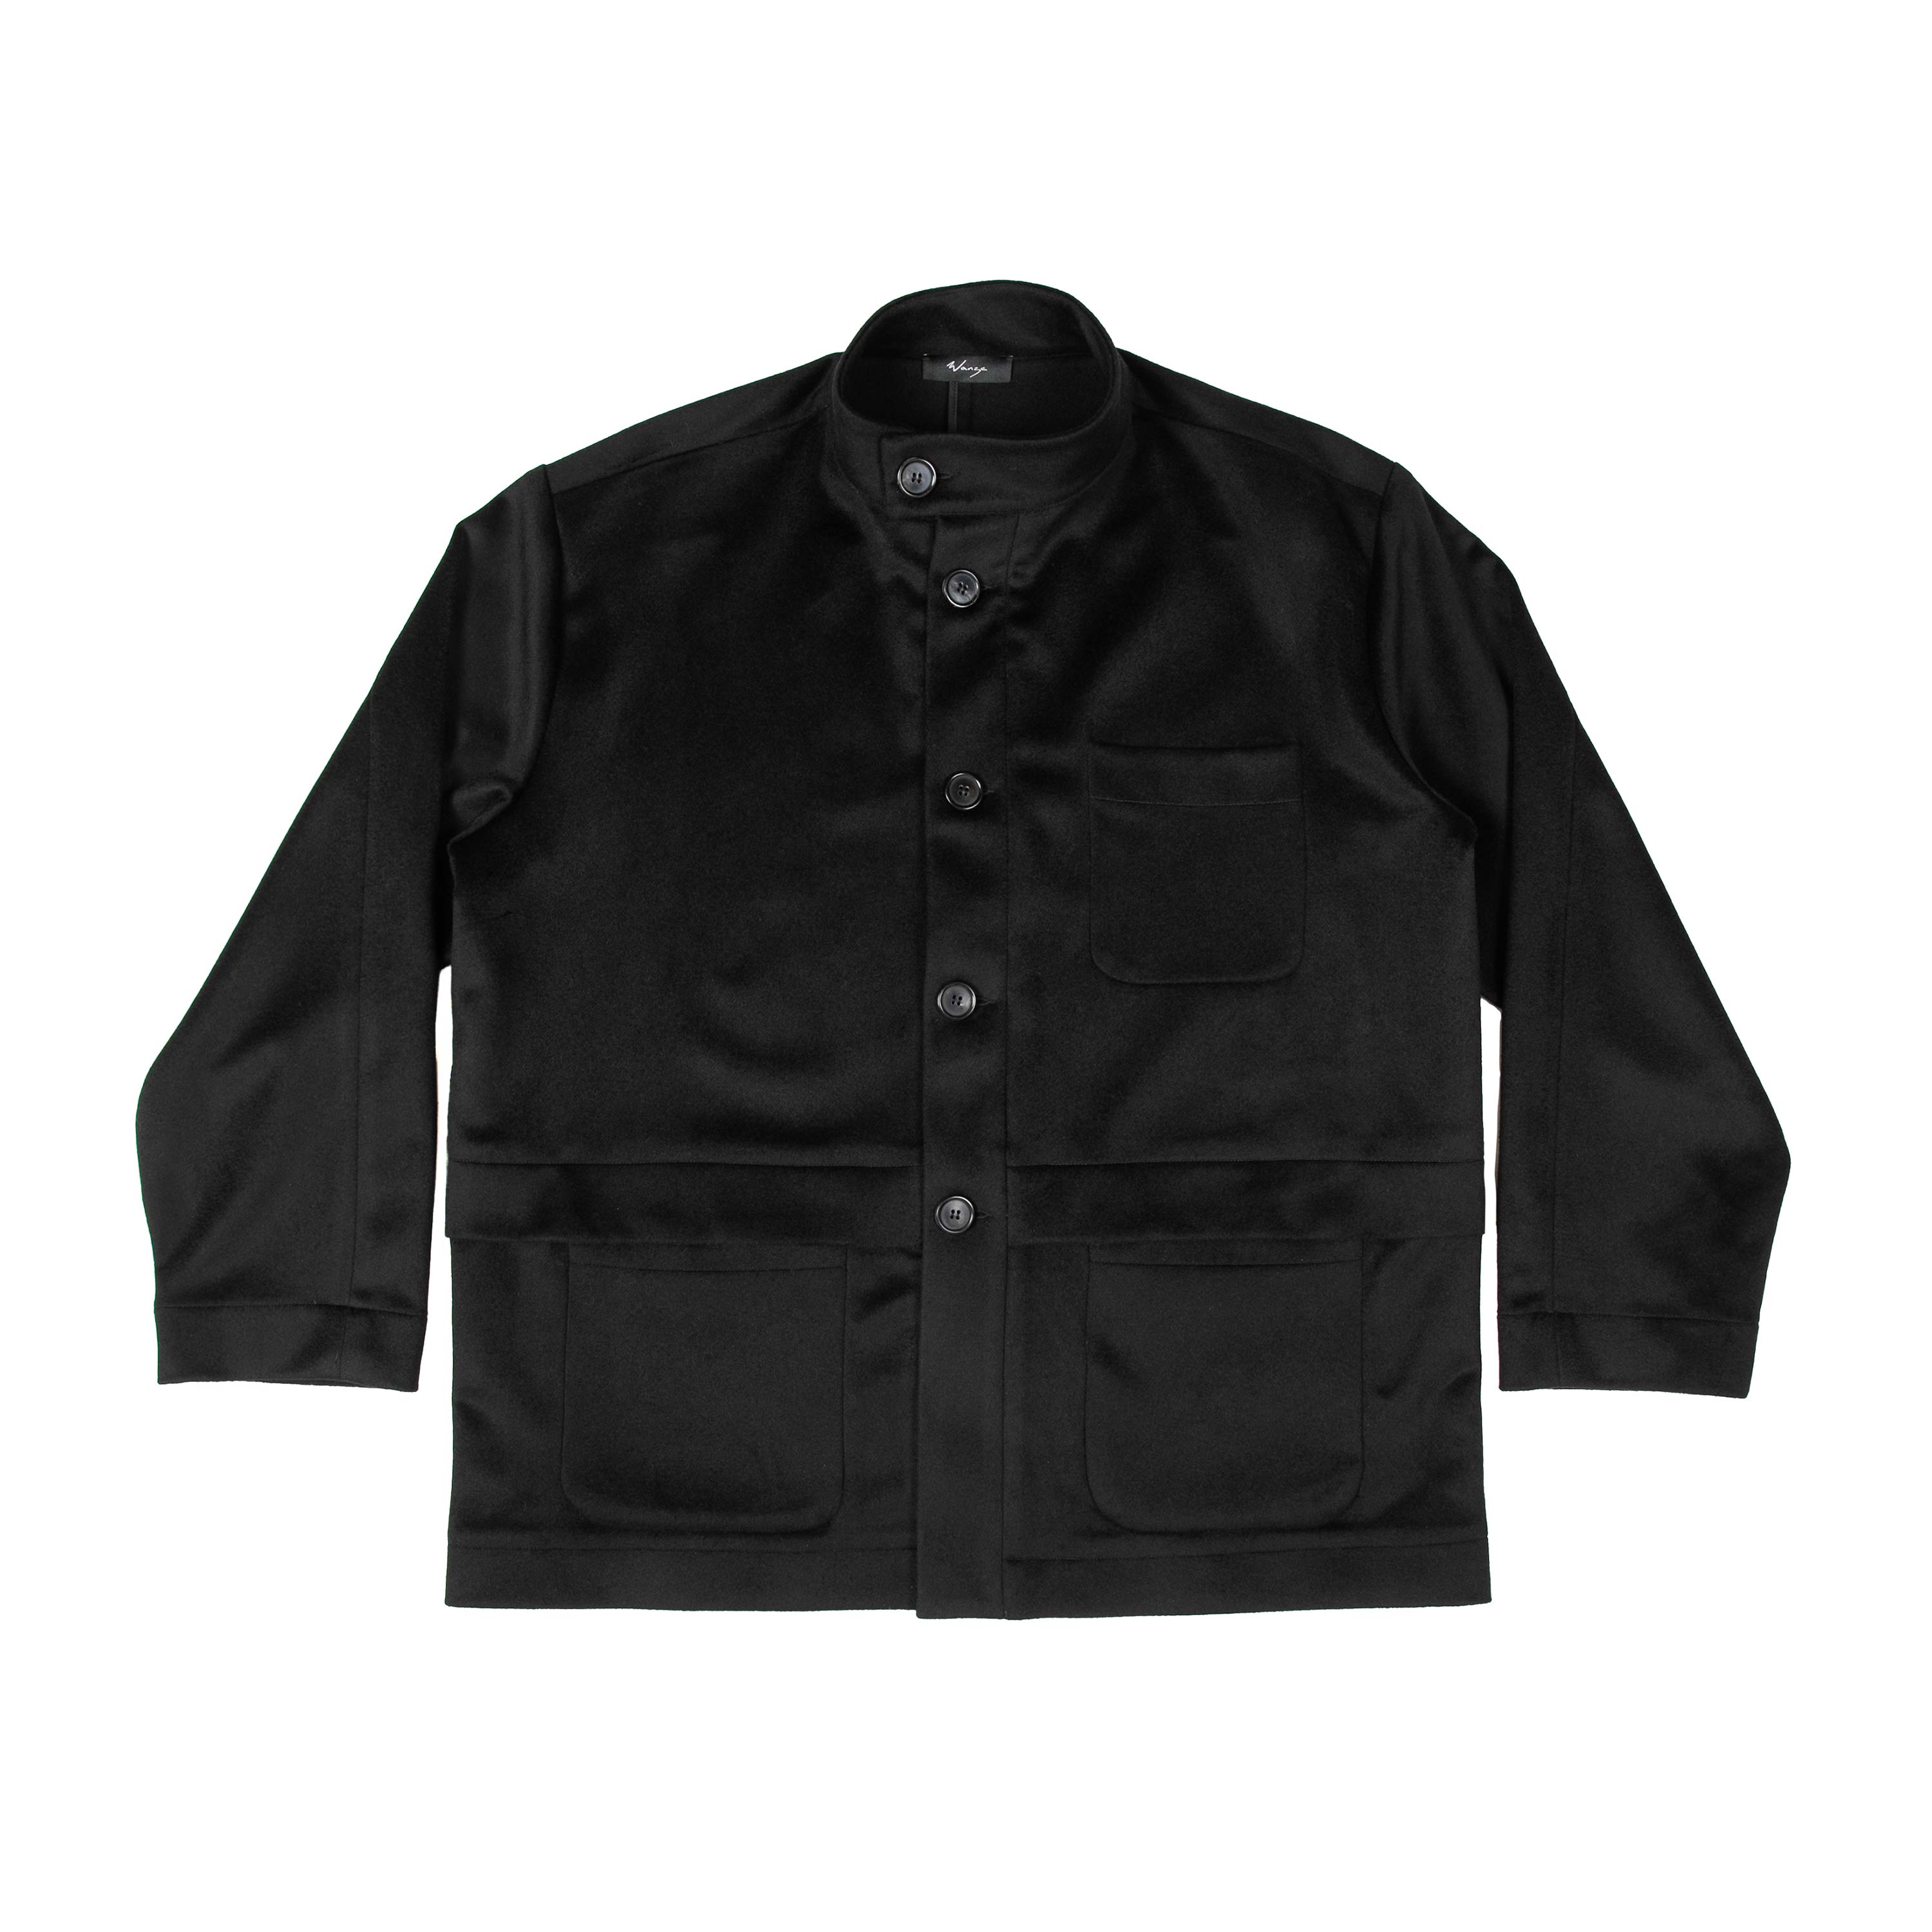 Forestière Jacket Brushed Wool Black - PREORDER